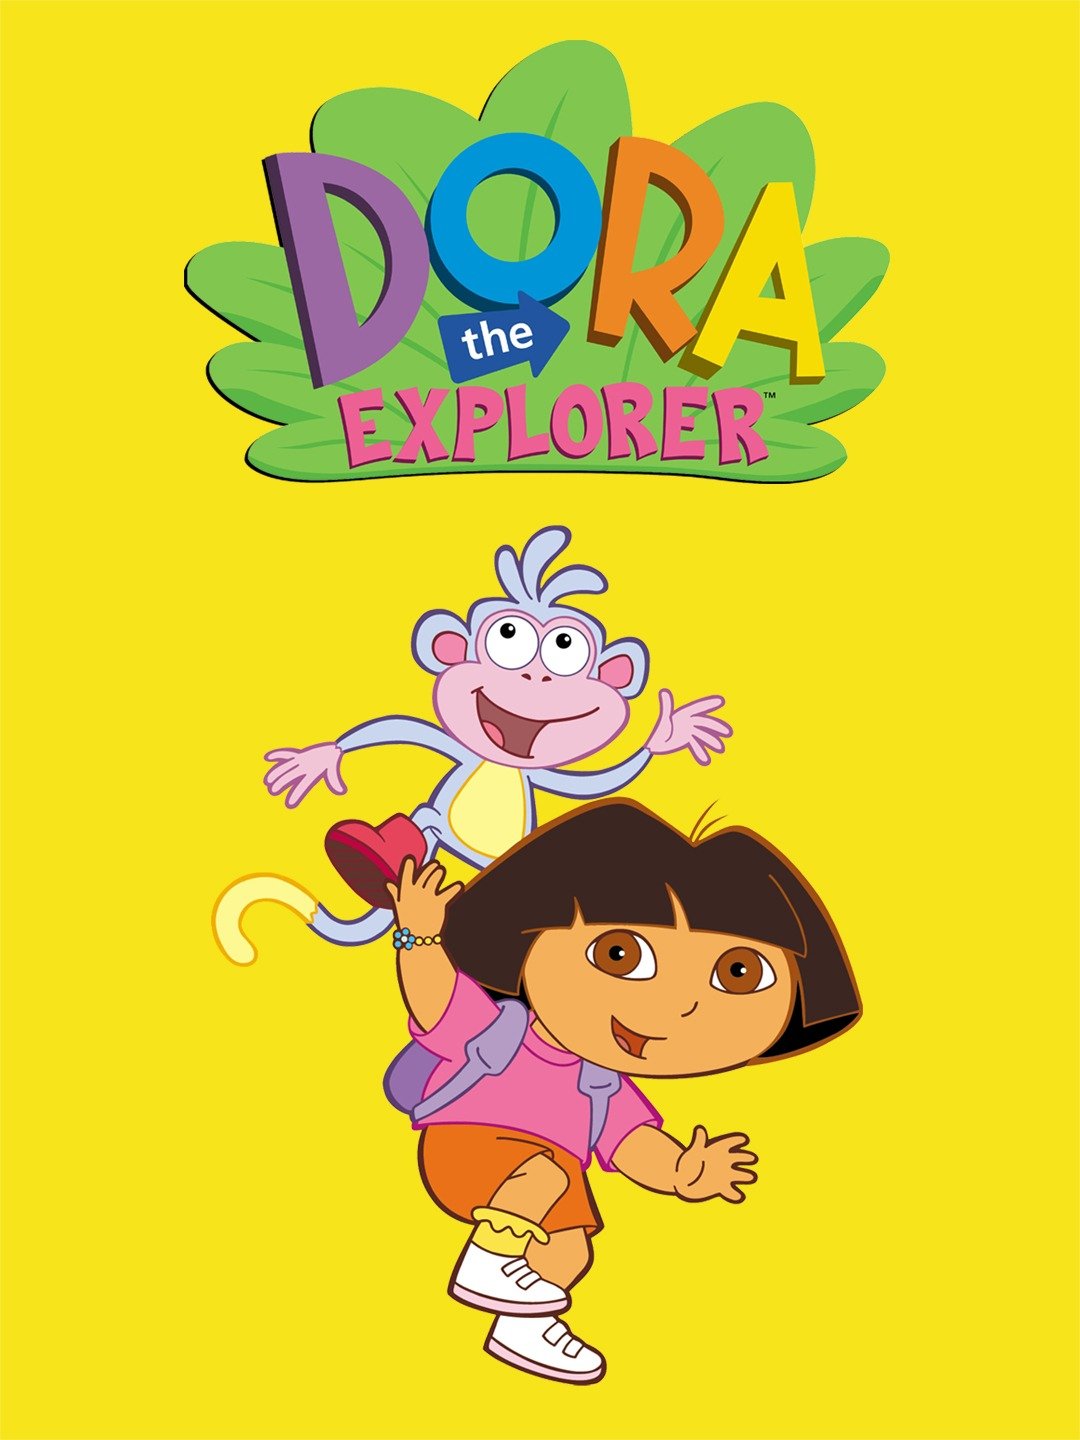 Dora character sketch - YouTube